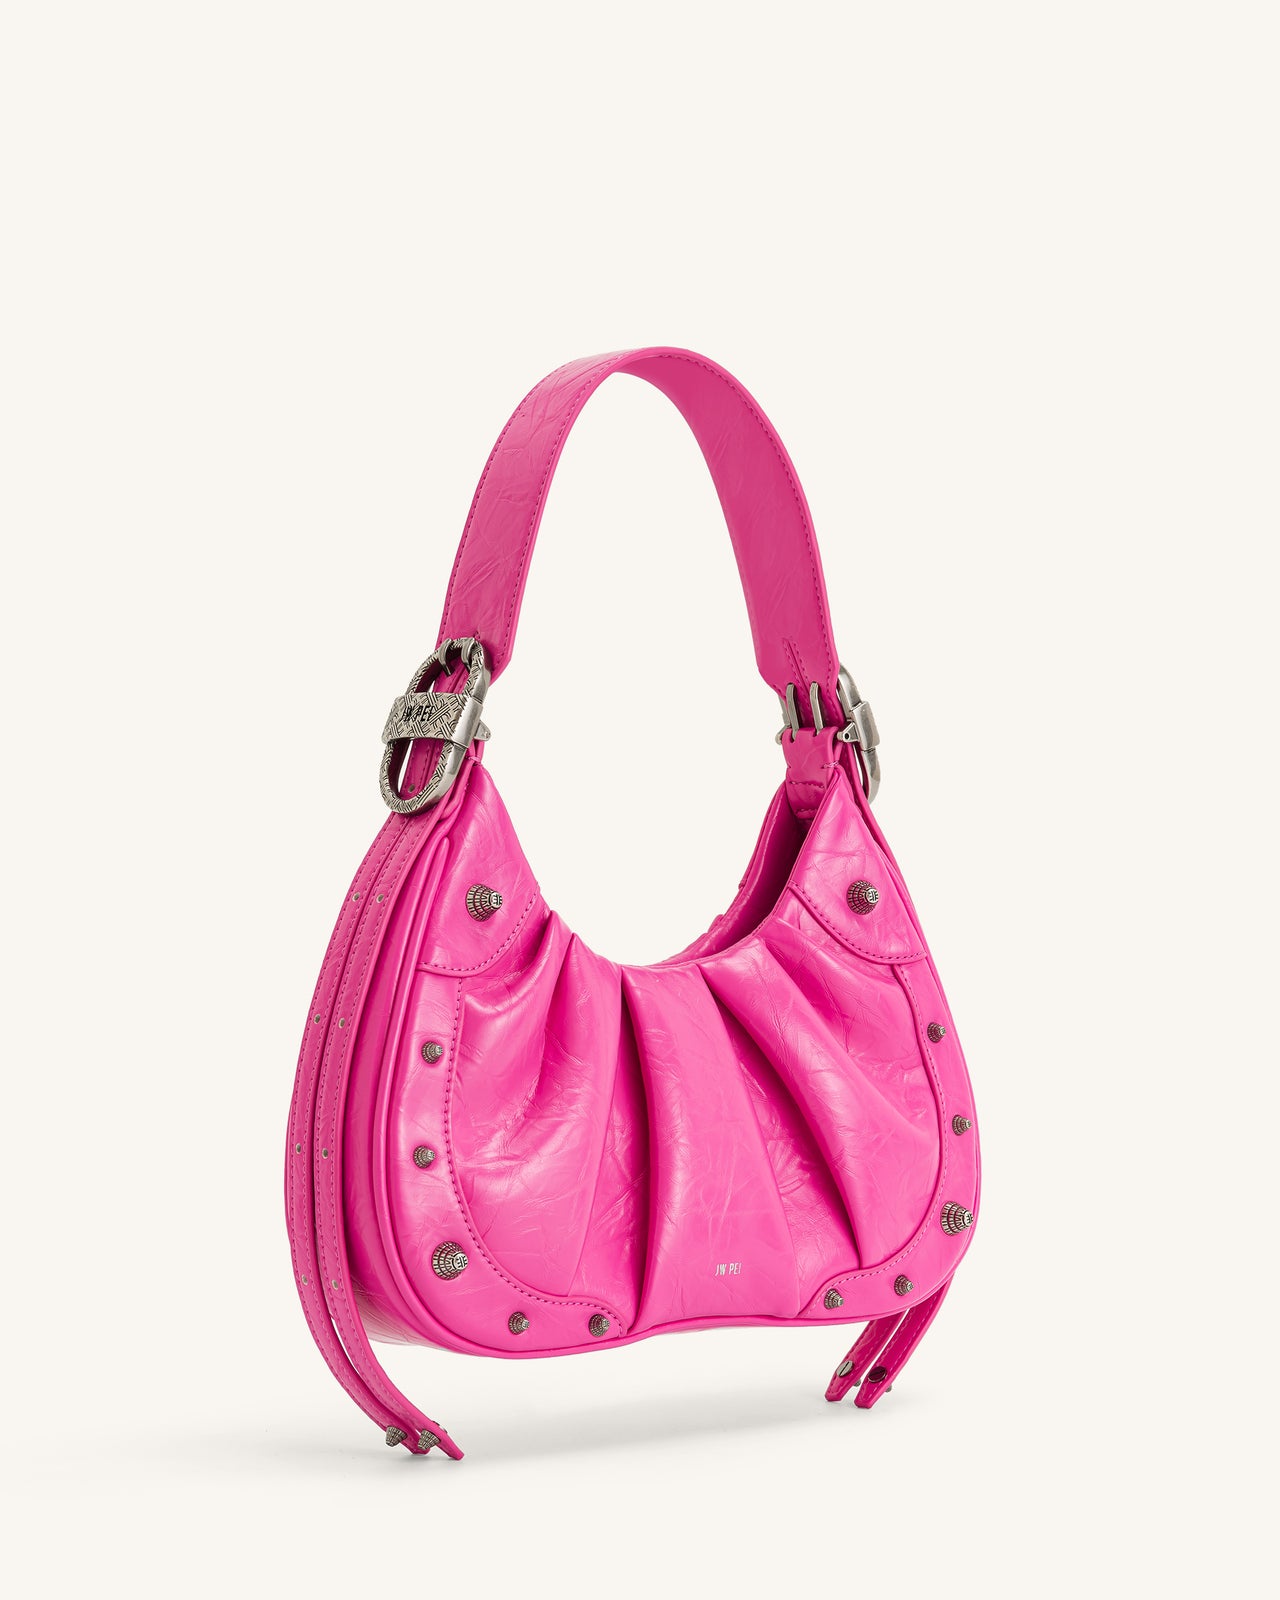 Gabbi Crushed Ruched Hobo Handbag - Bright Pink